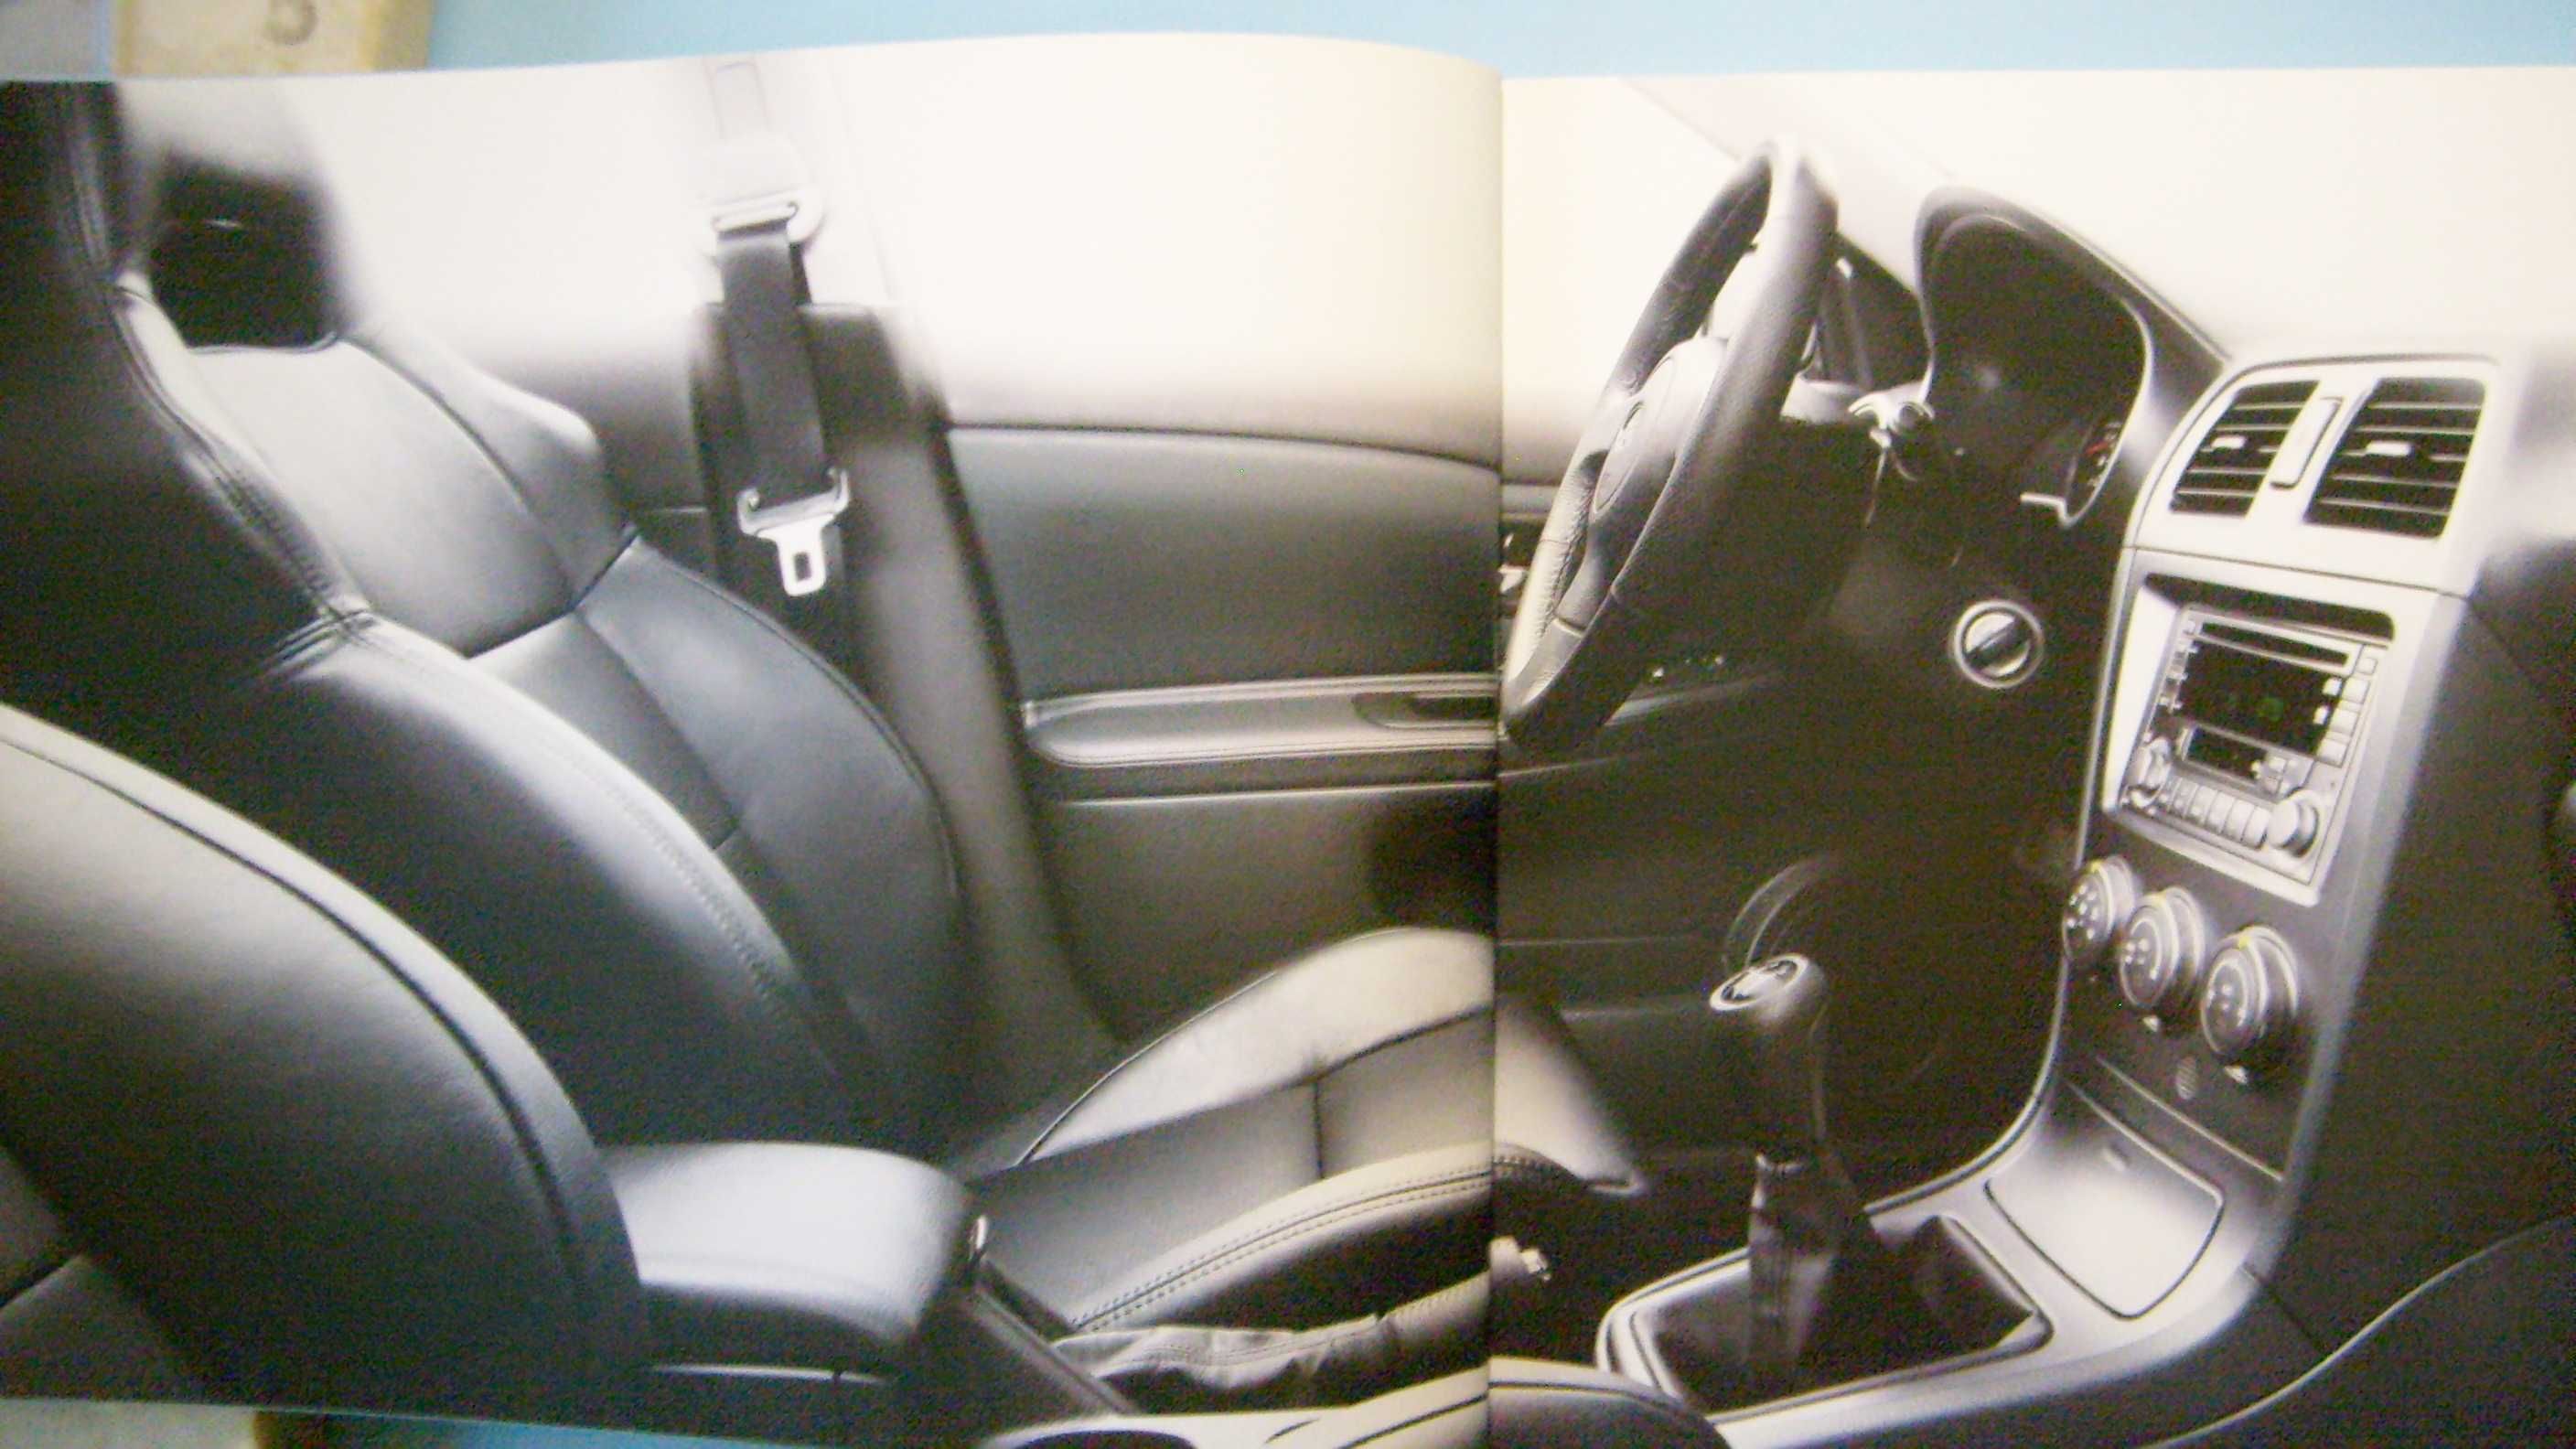 Subaru Impreza 2007 (GD) Sedan & Kombi POLSKA * prospekt 44 str. IDEAŁ